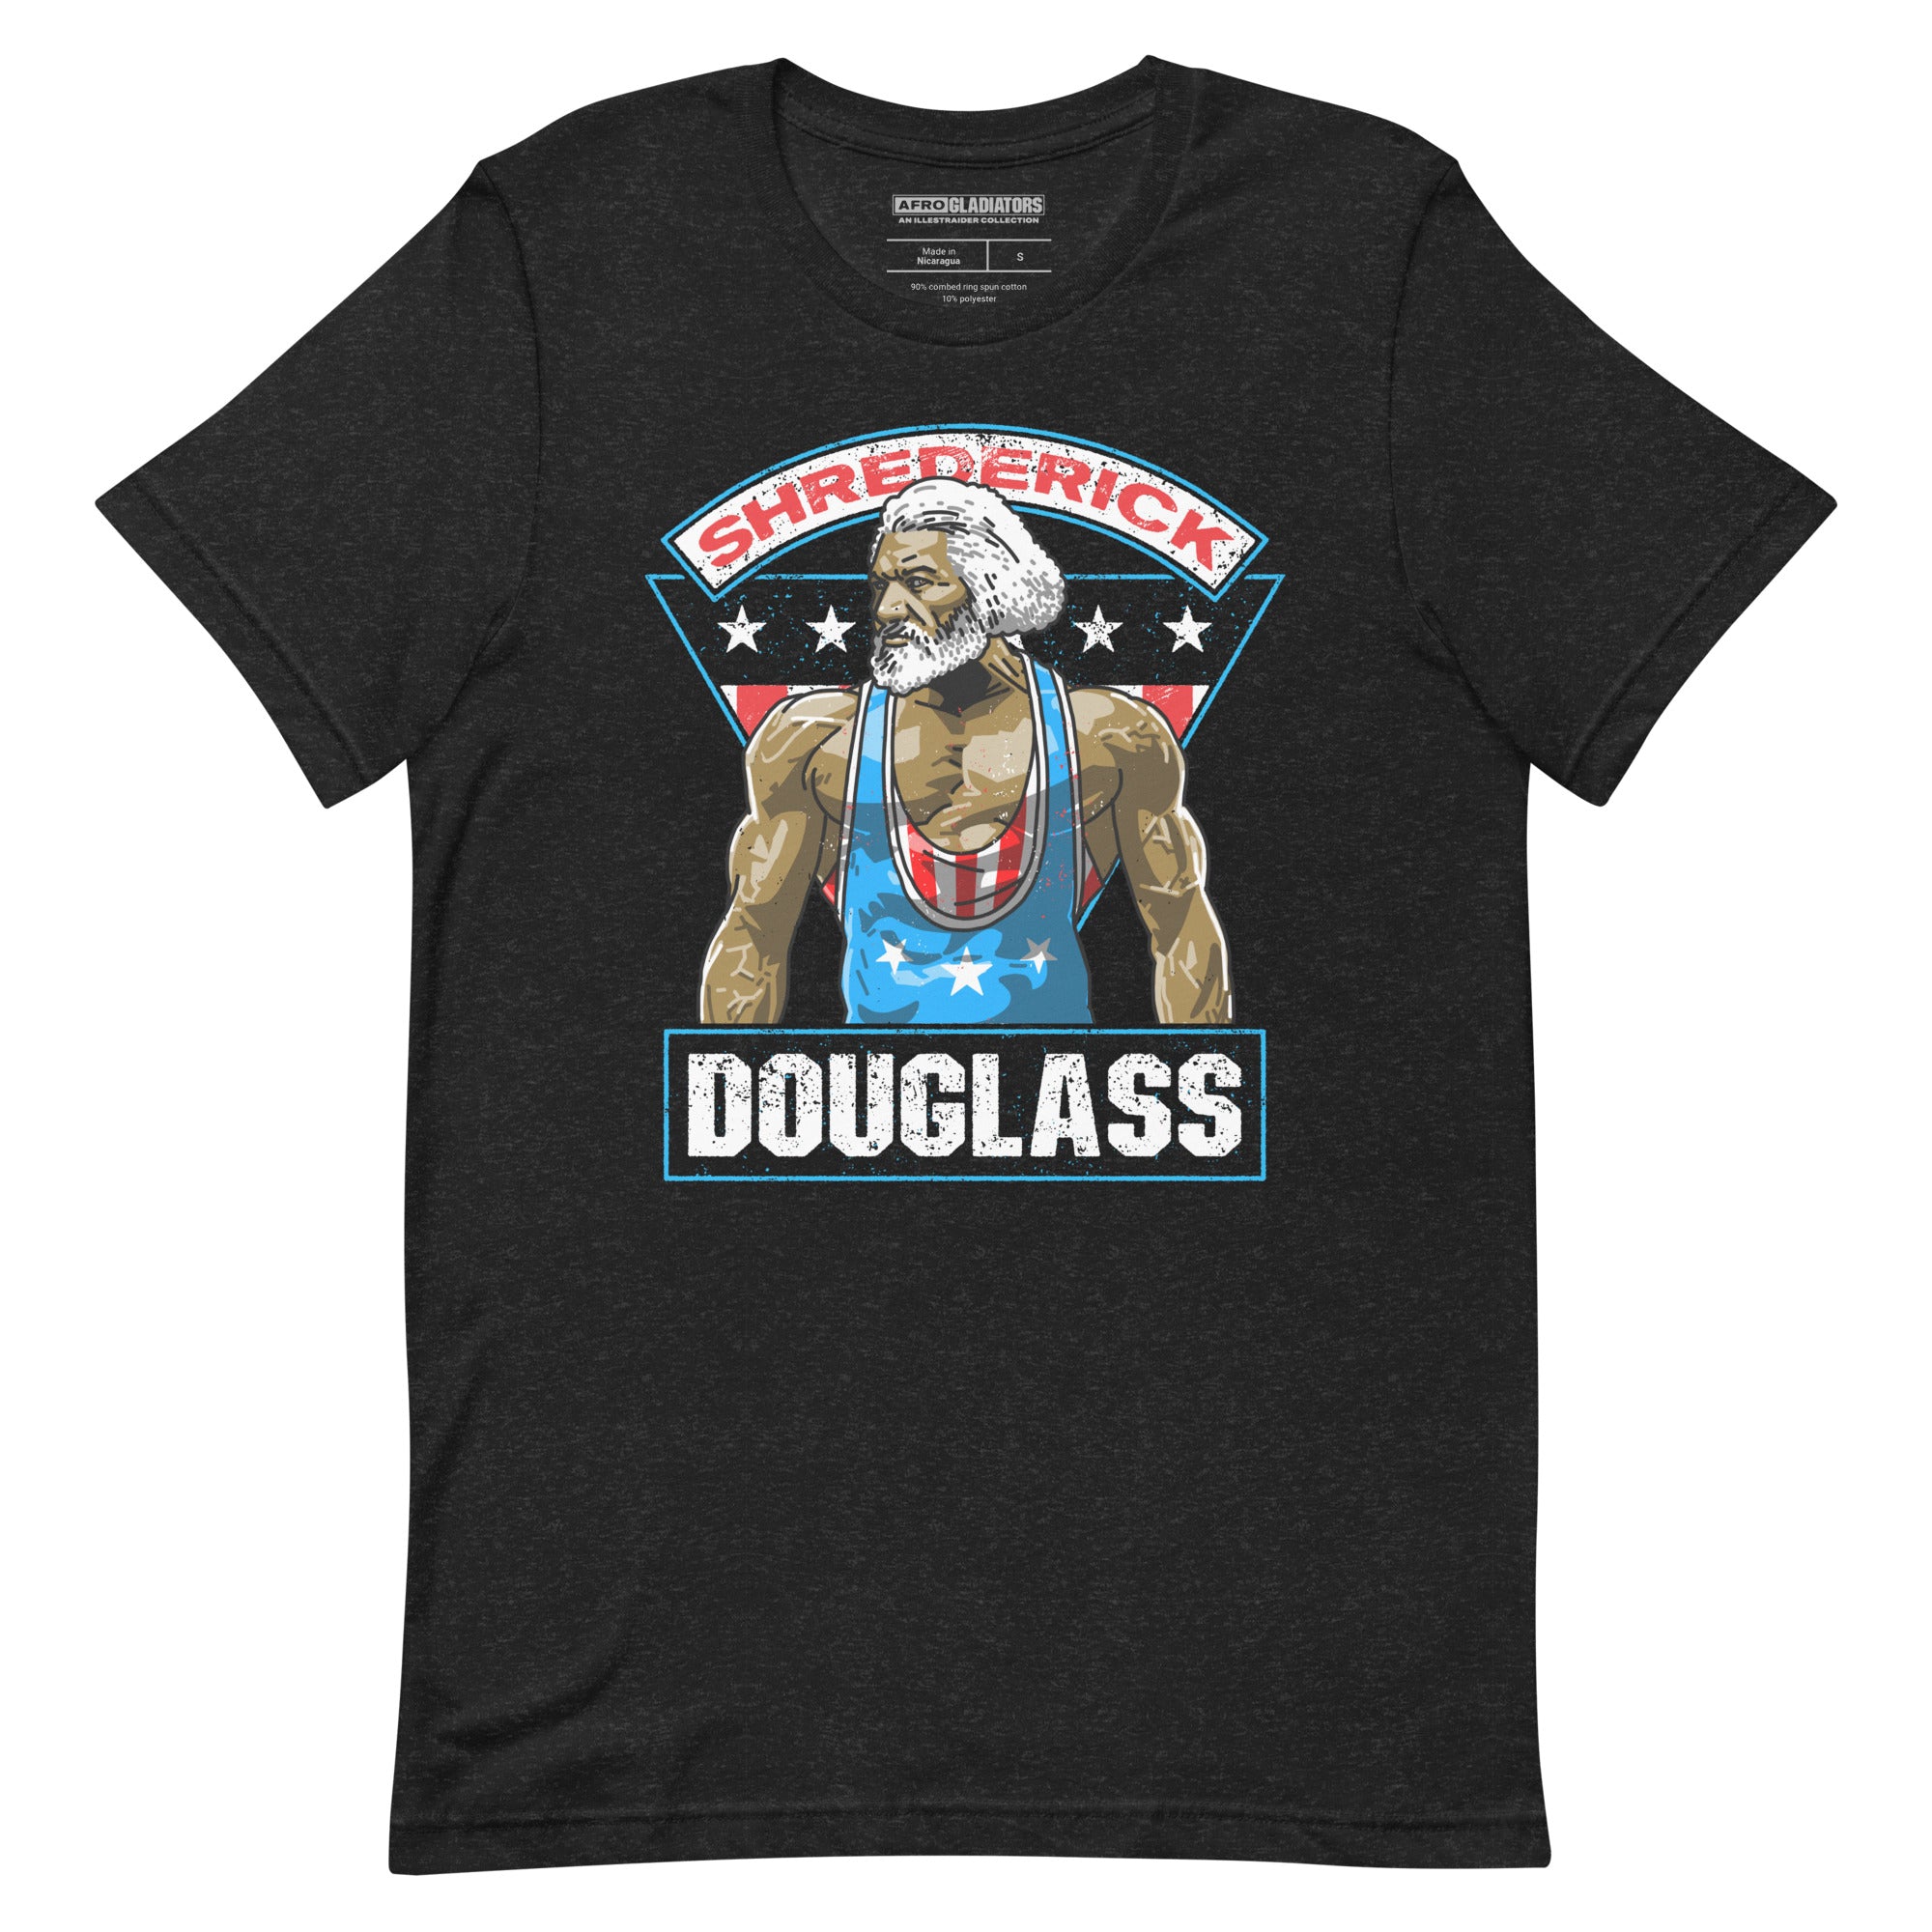 Frederick &quot;Shredderick&quot; Douglass T-Shirt